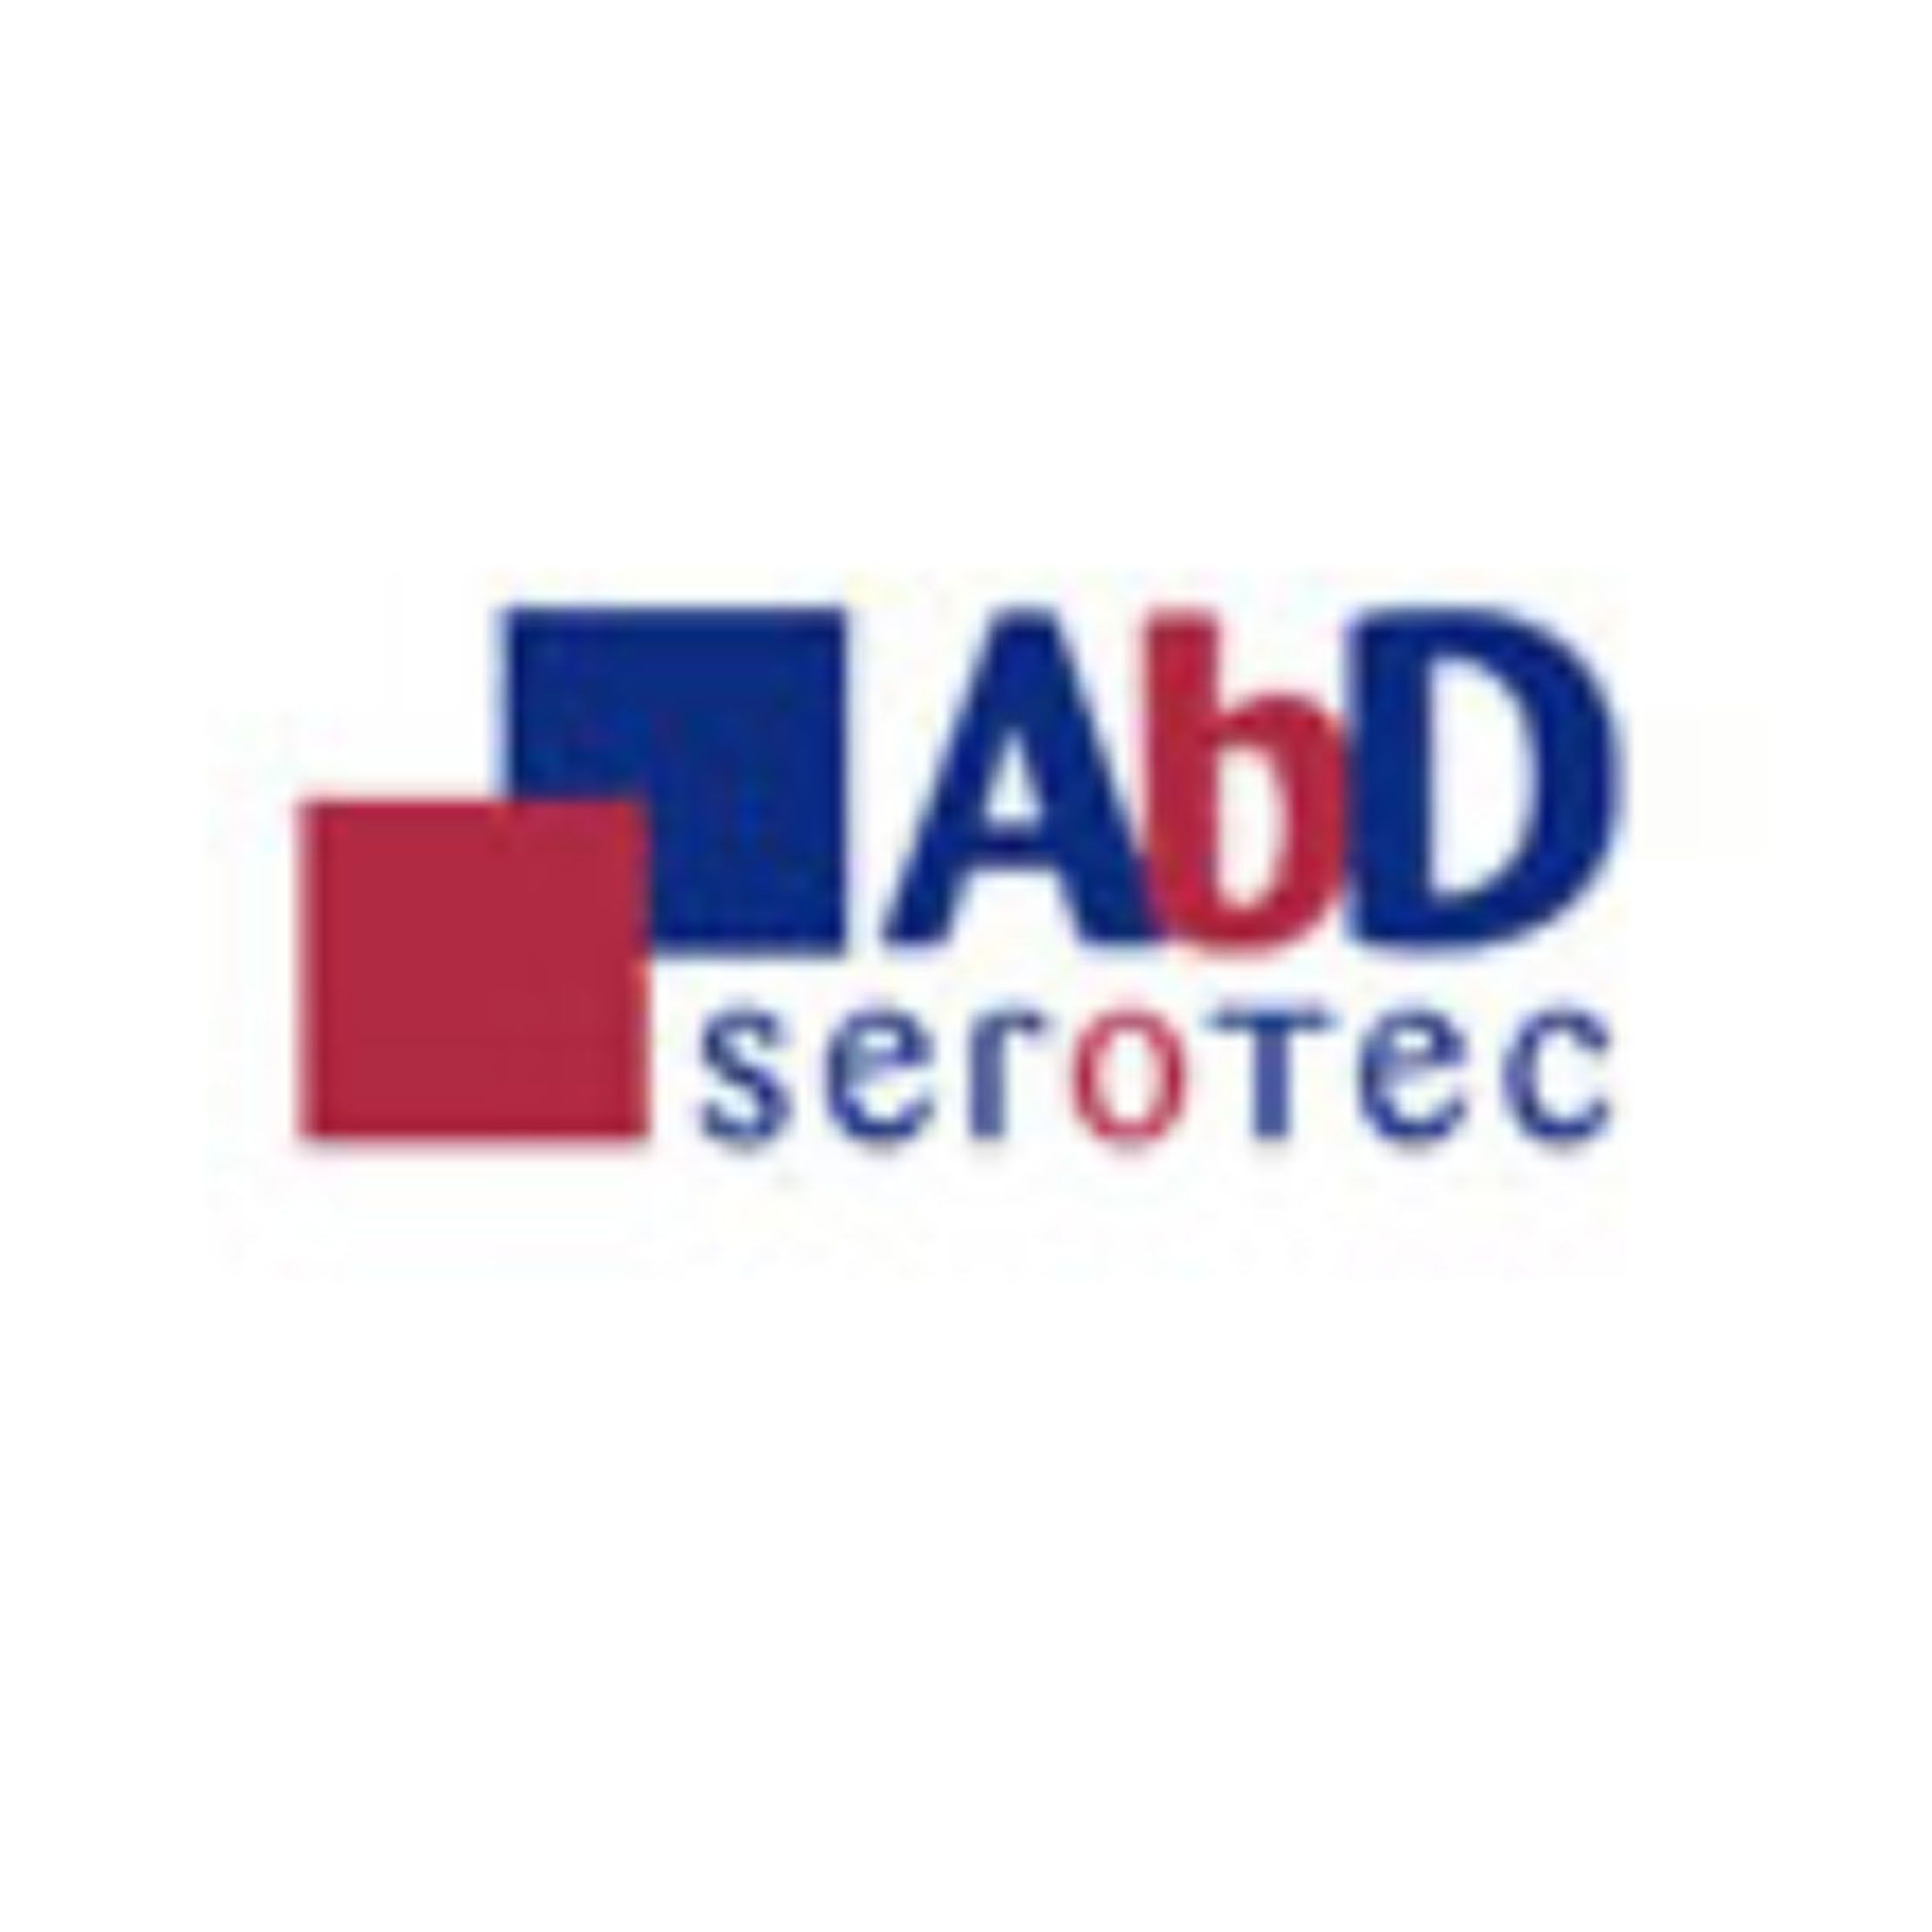 AbD Serotec抗体和免疫学试剂、大鼠CD68单抗,现货